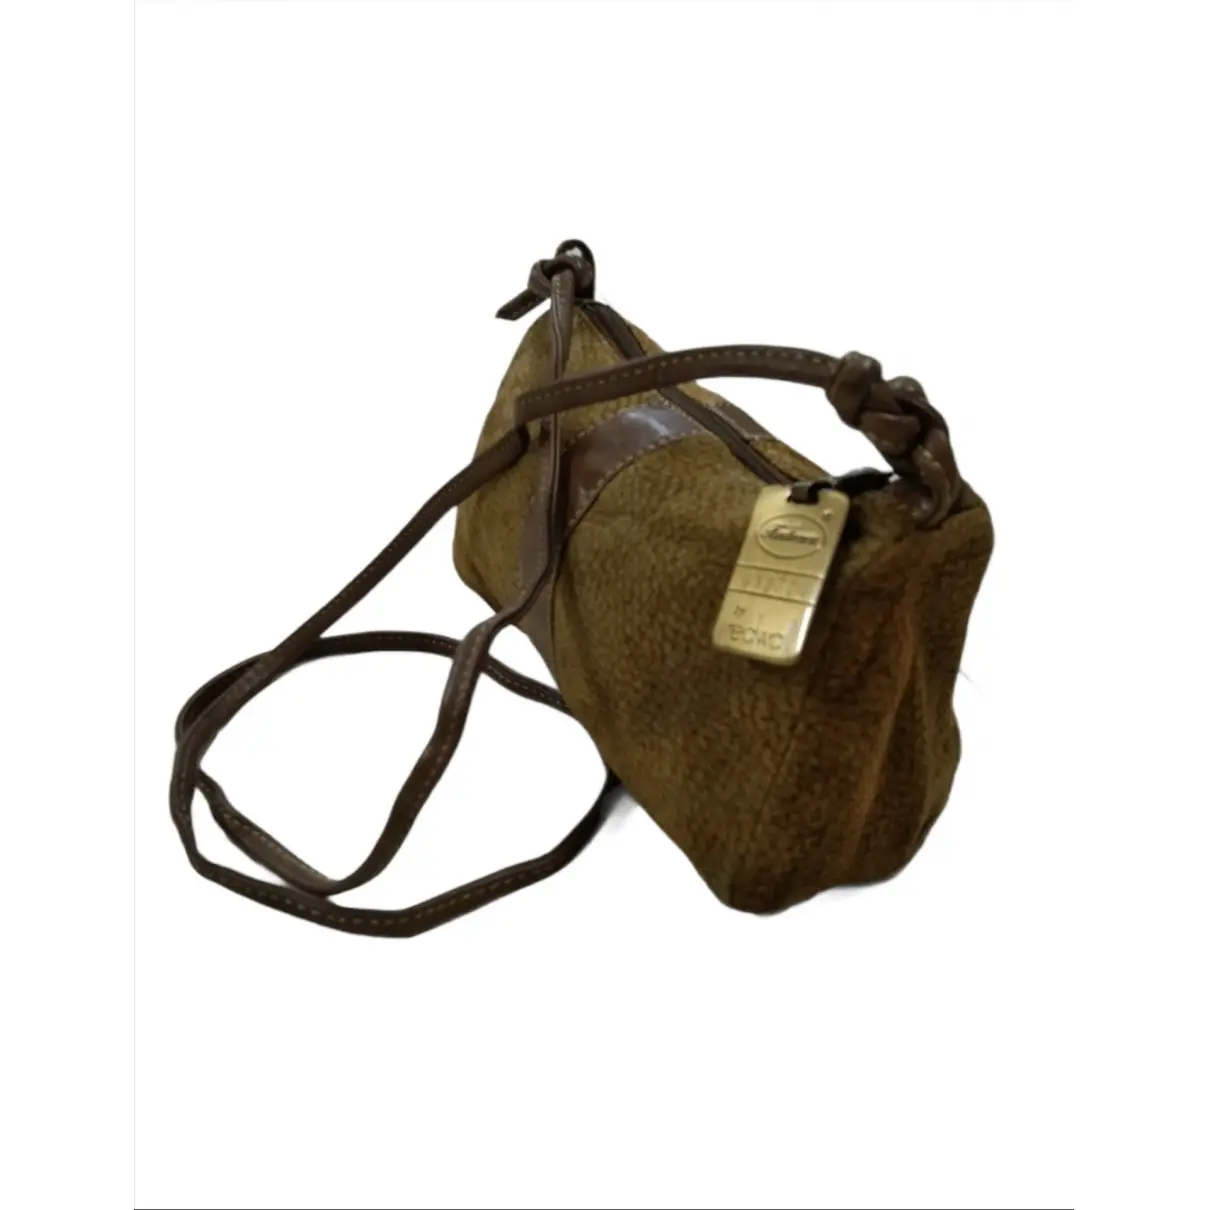 Buy BORBONESE Patent leather handbag online